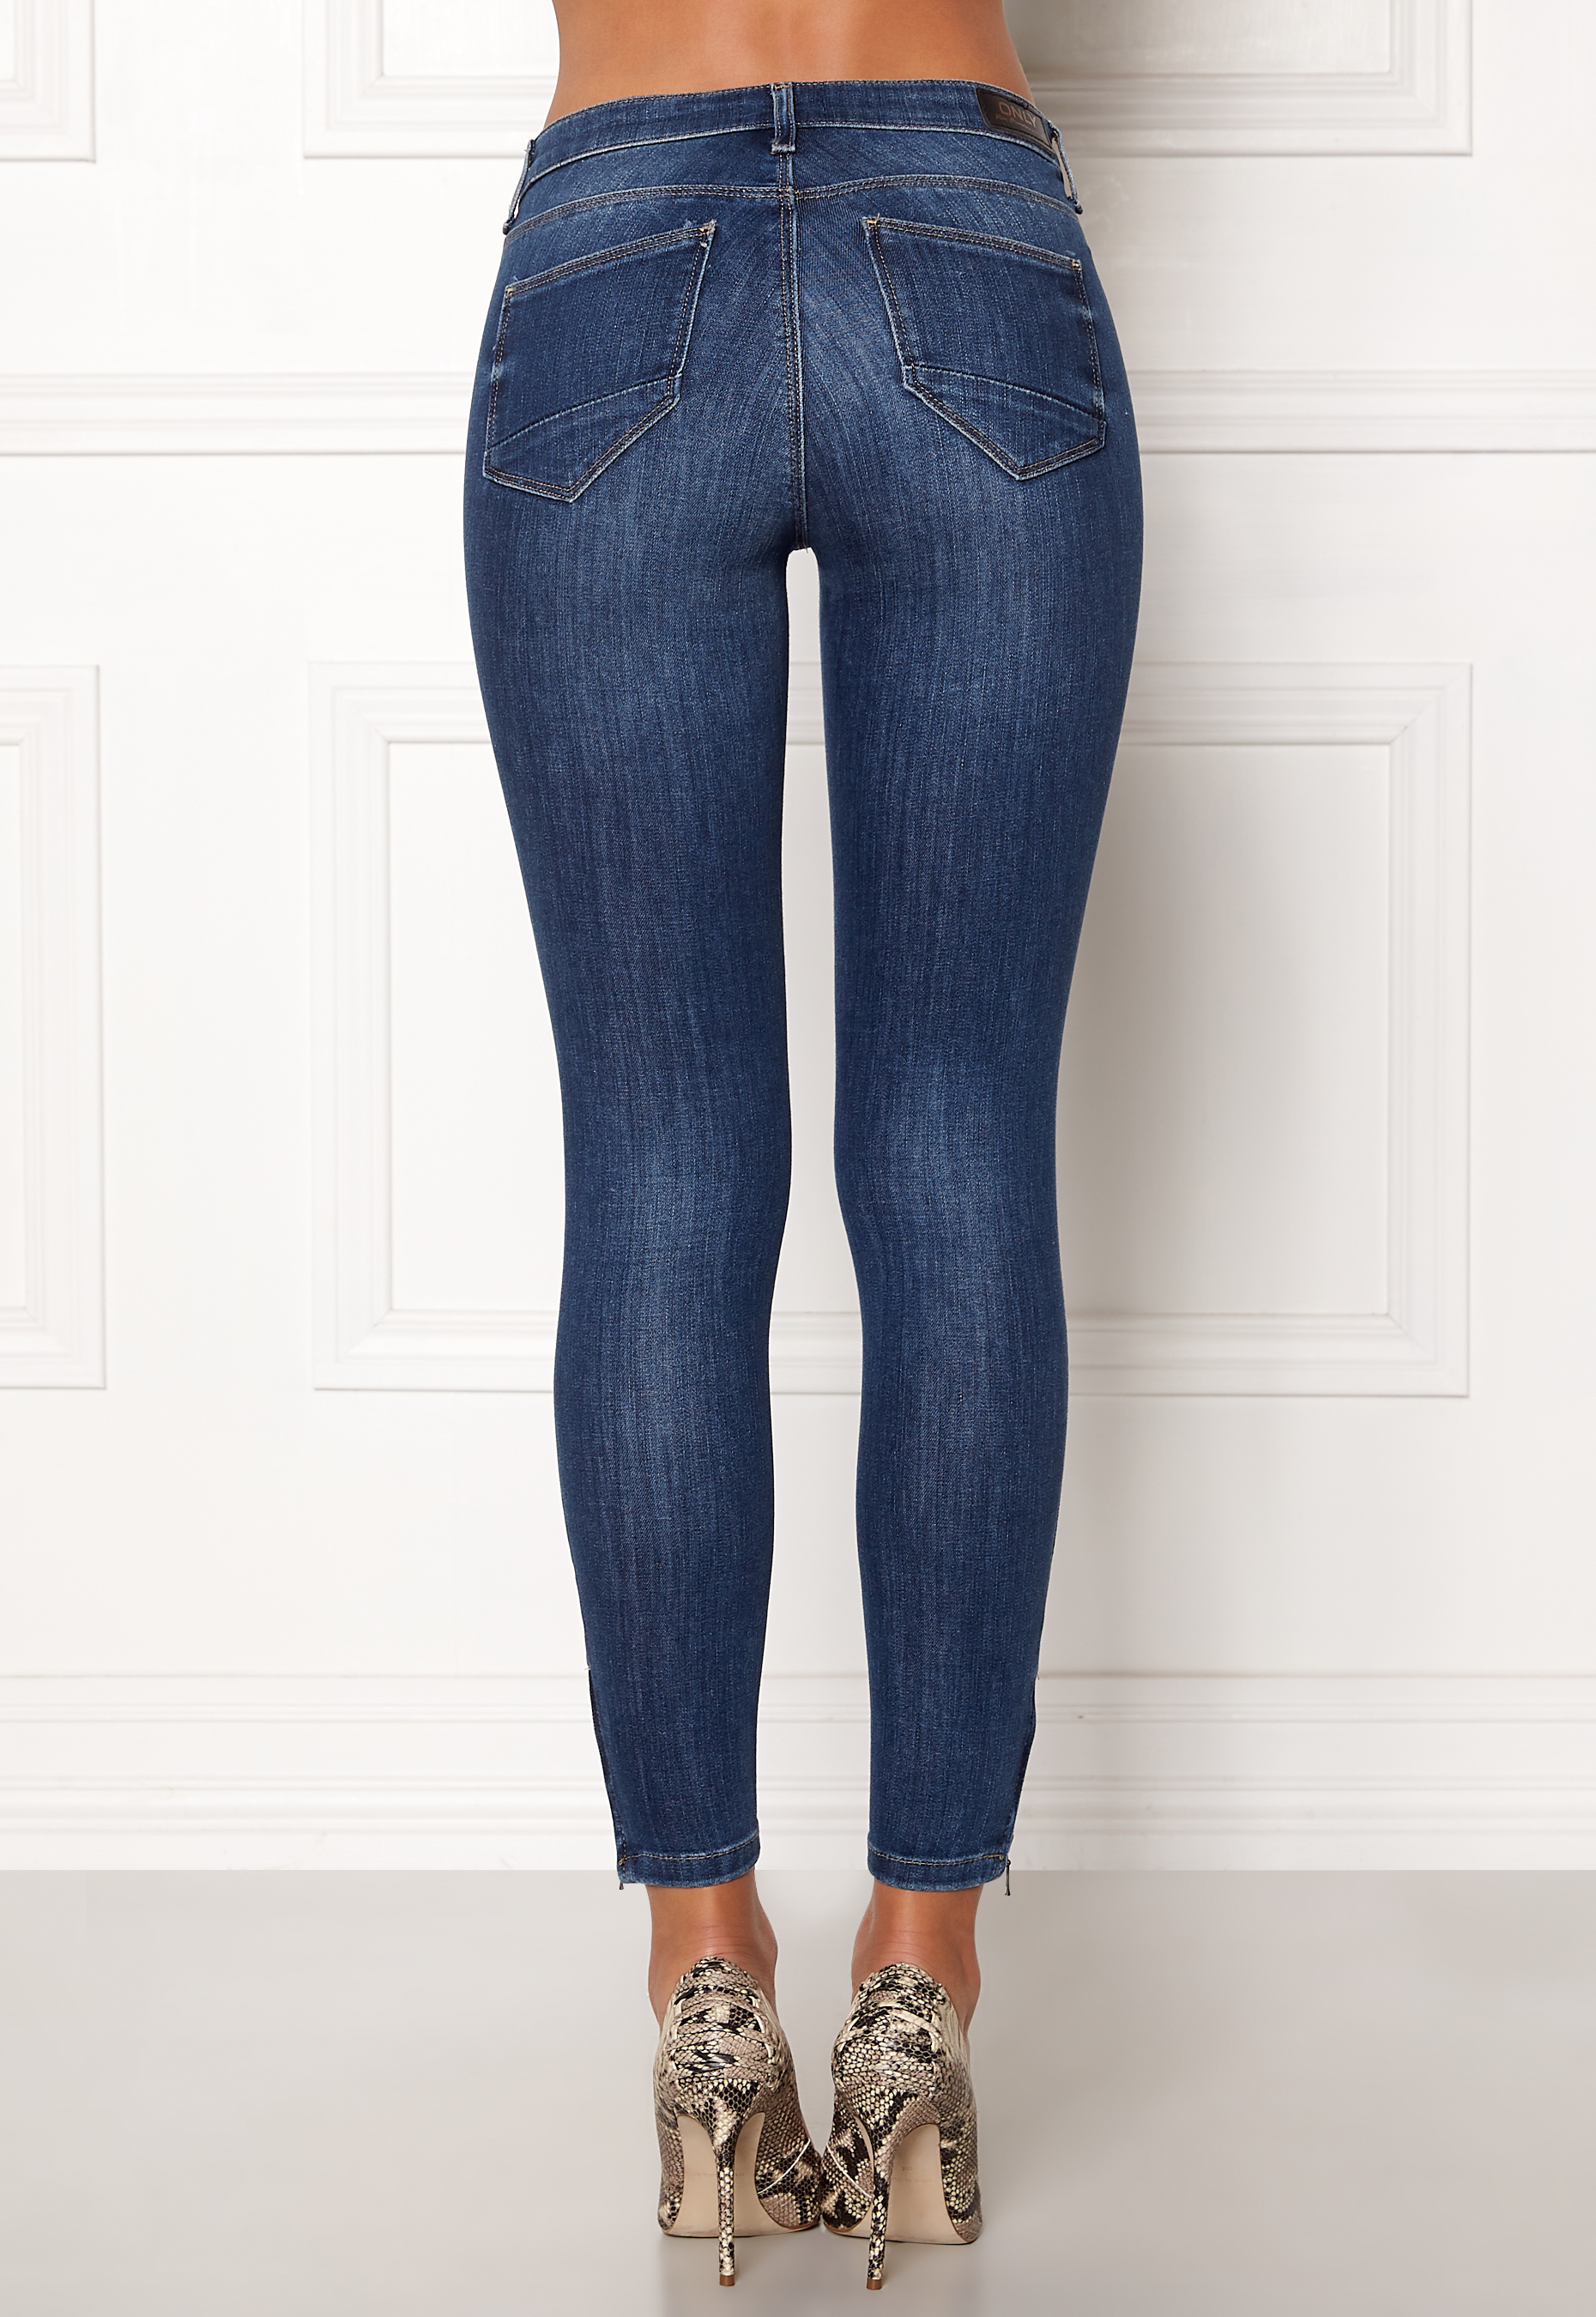 size 30 jeans